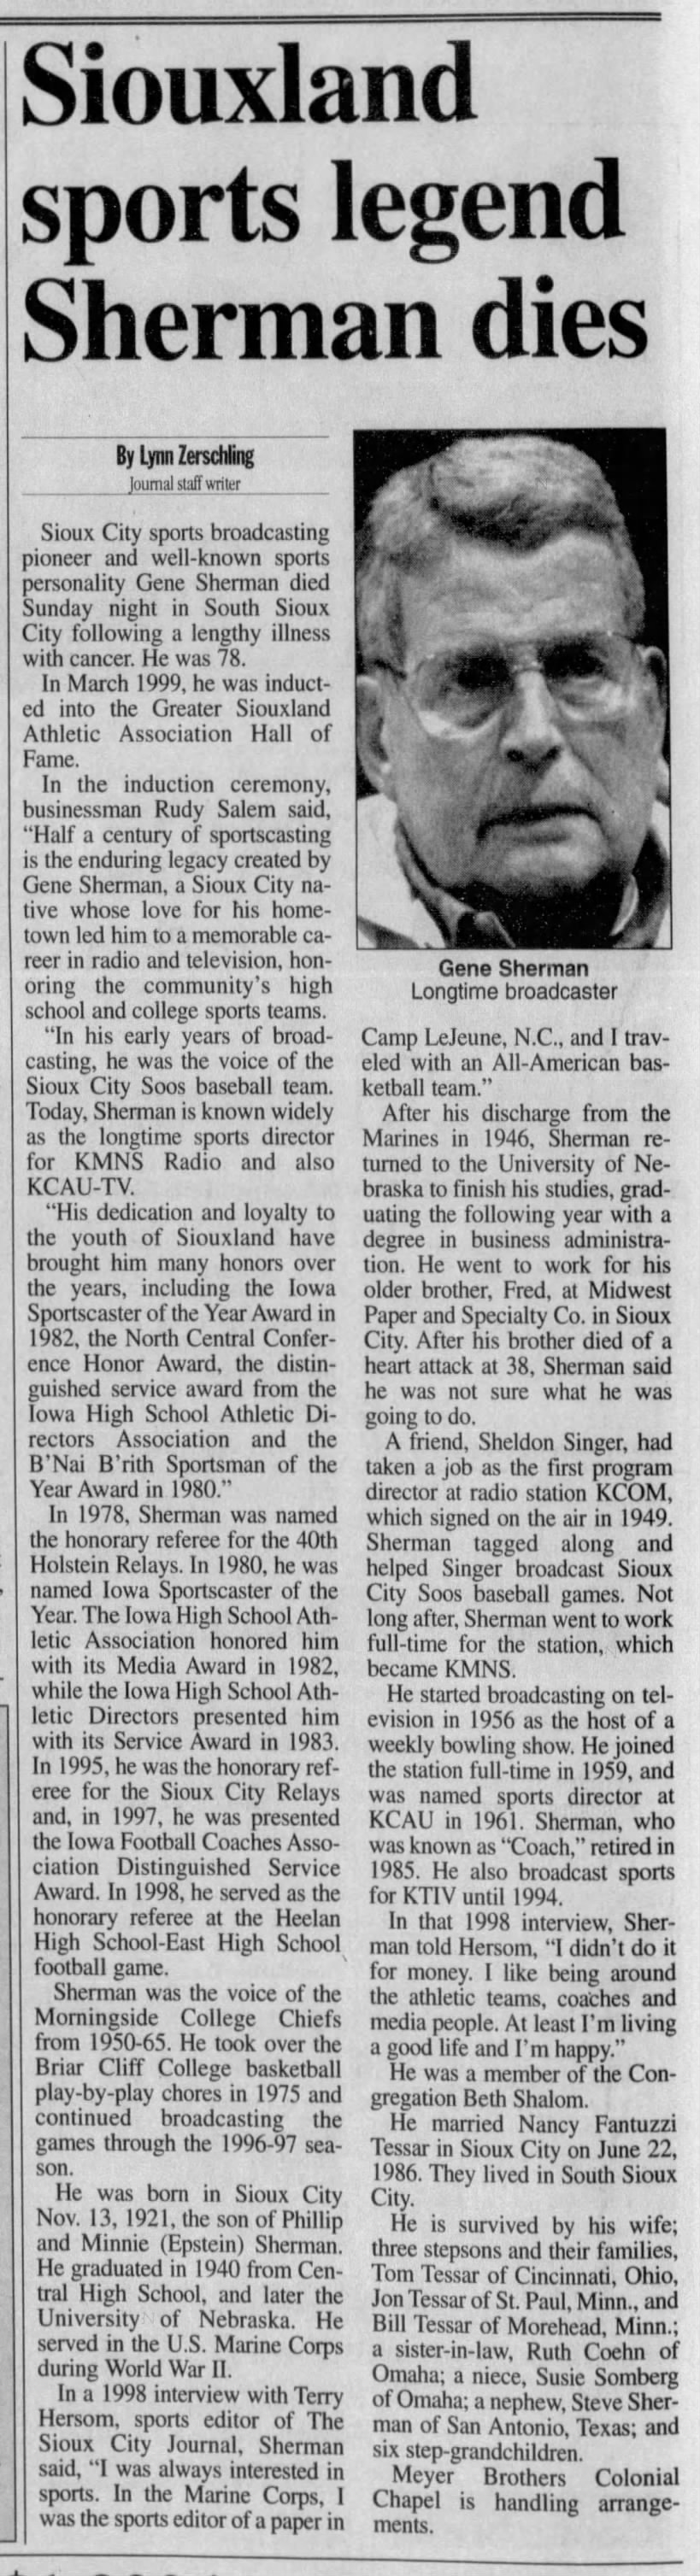 Siouxland sports legend Sherman dies